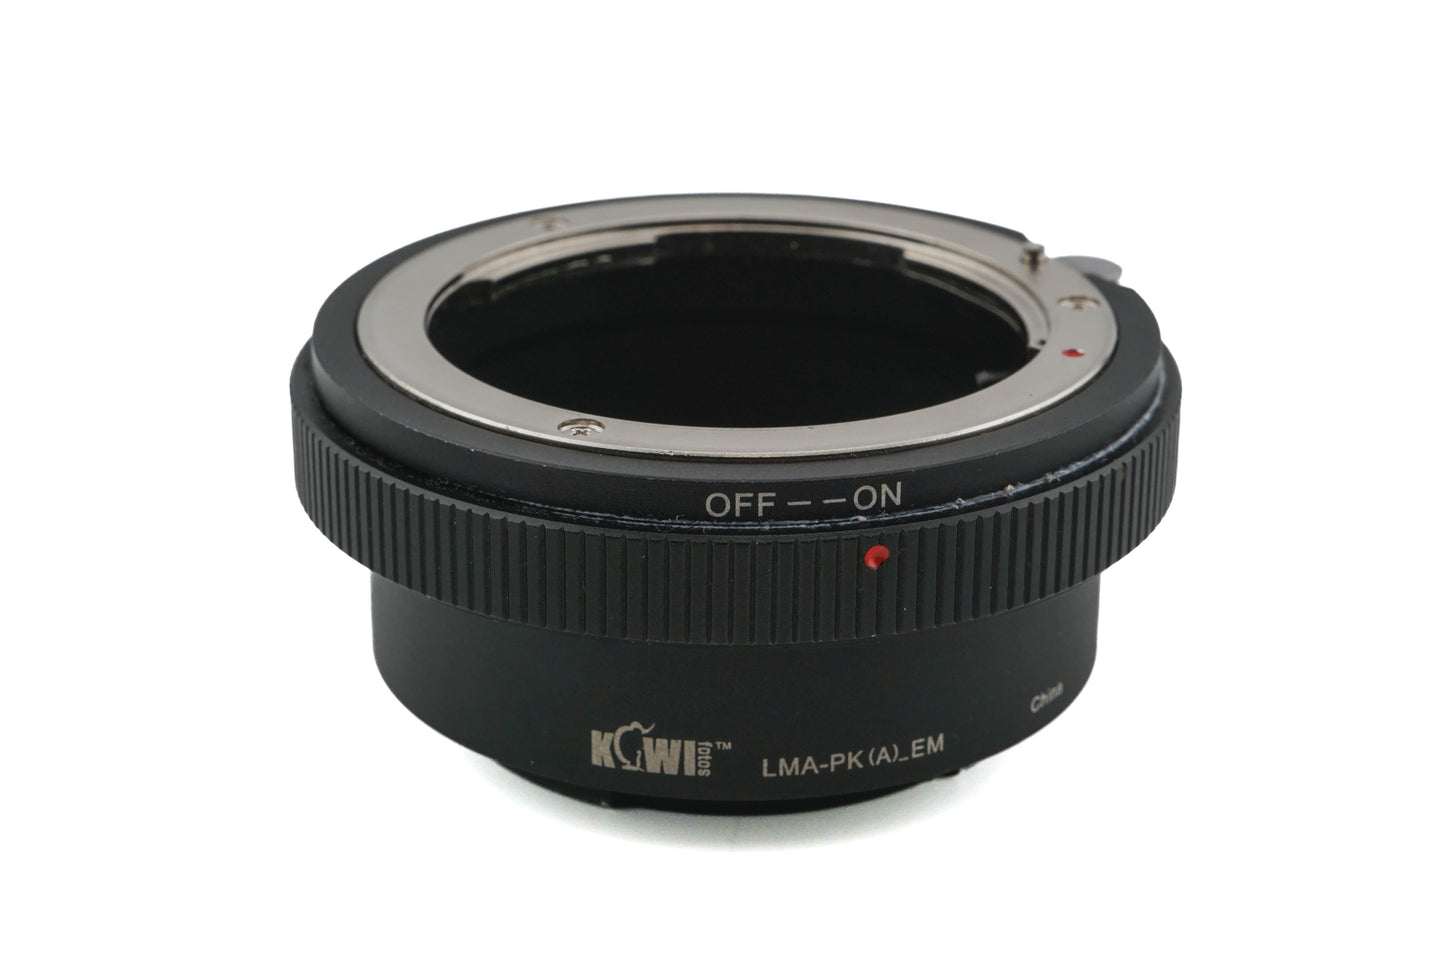 Kiwi Pentax K - Sony E/FE (LMA-PK(A)_EM) Adapter - Lens Adapter